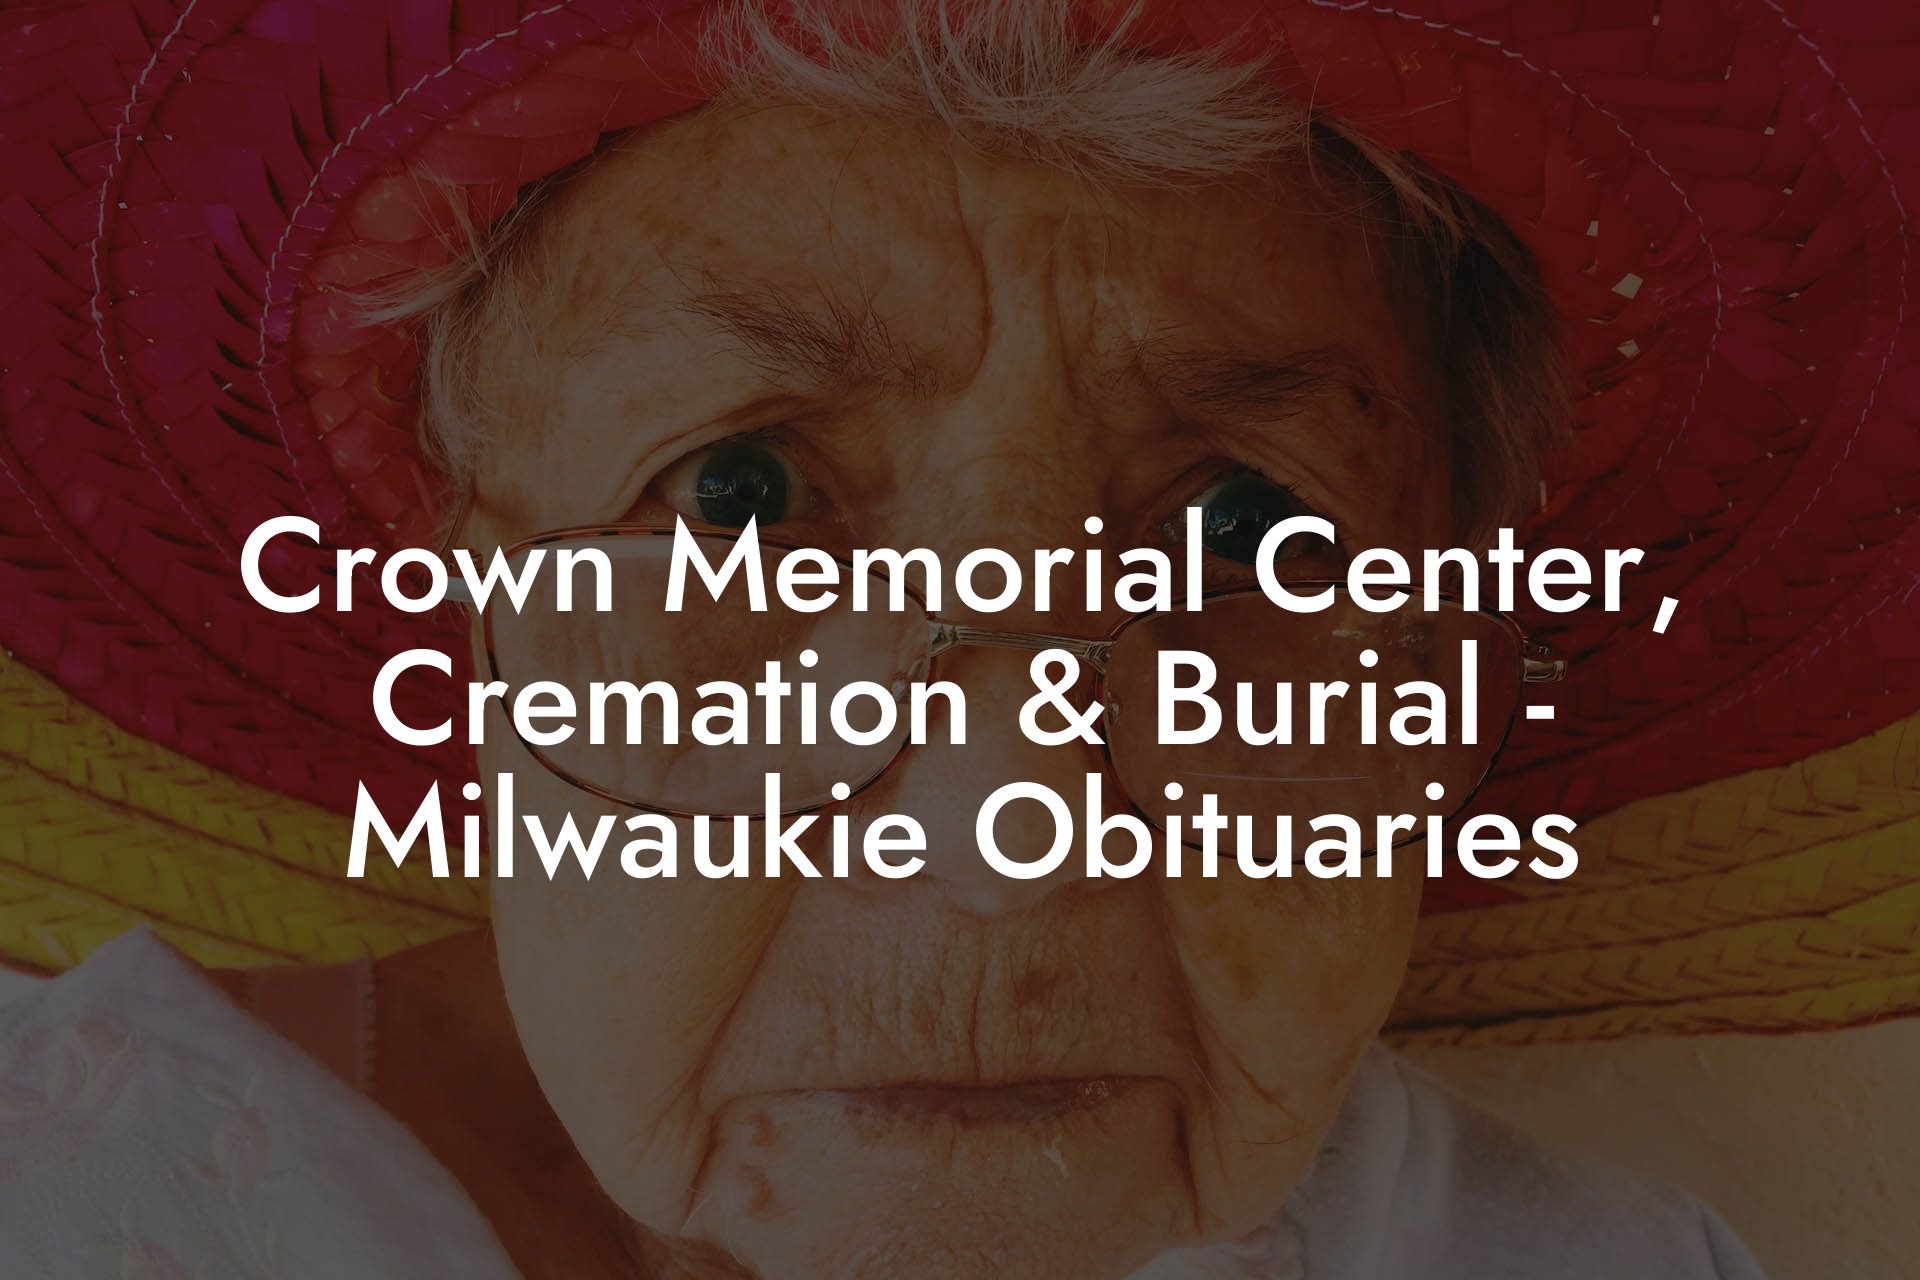 Crown Memorial Center, Cremation & Burial - Milwaukie Obituaries